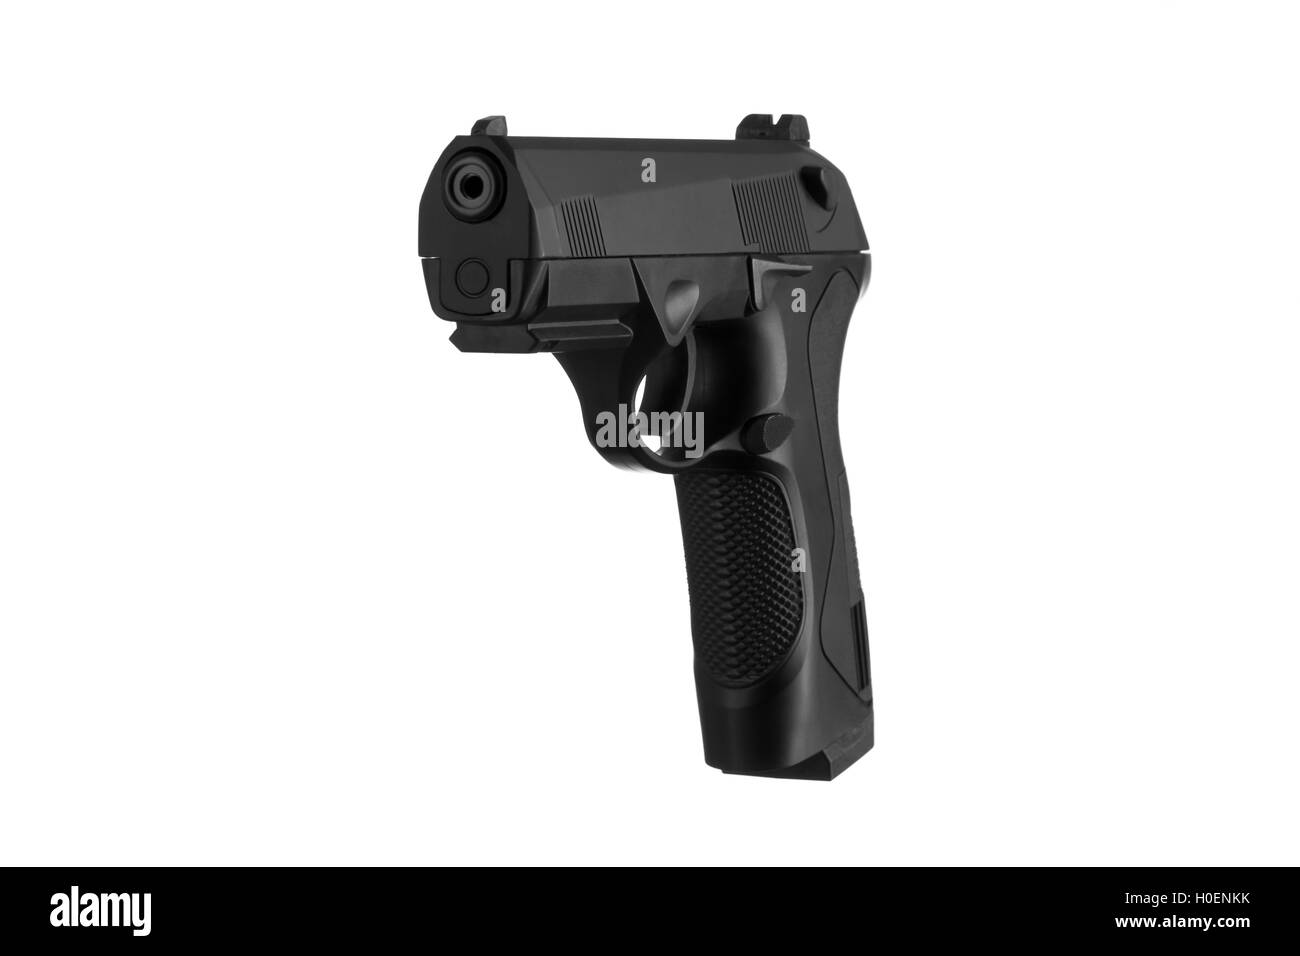 Handgun isolated on white background 3/4 view Stock Photo